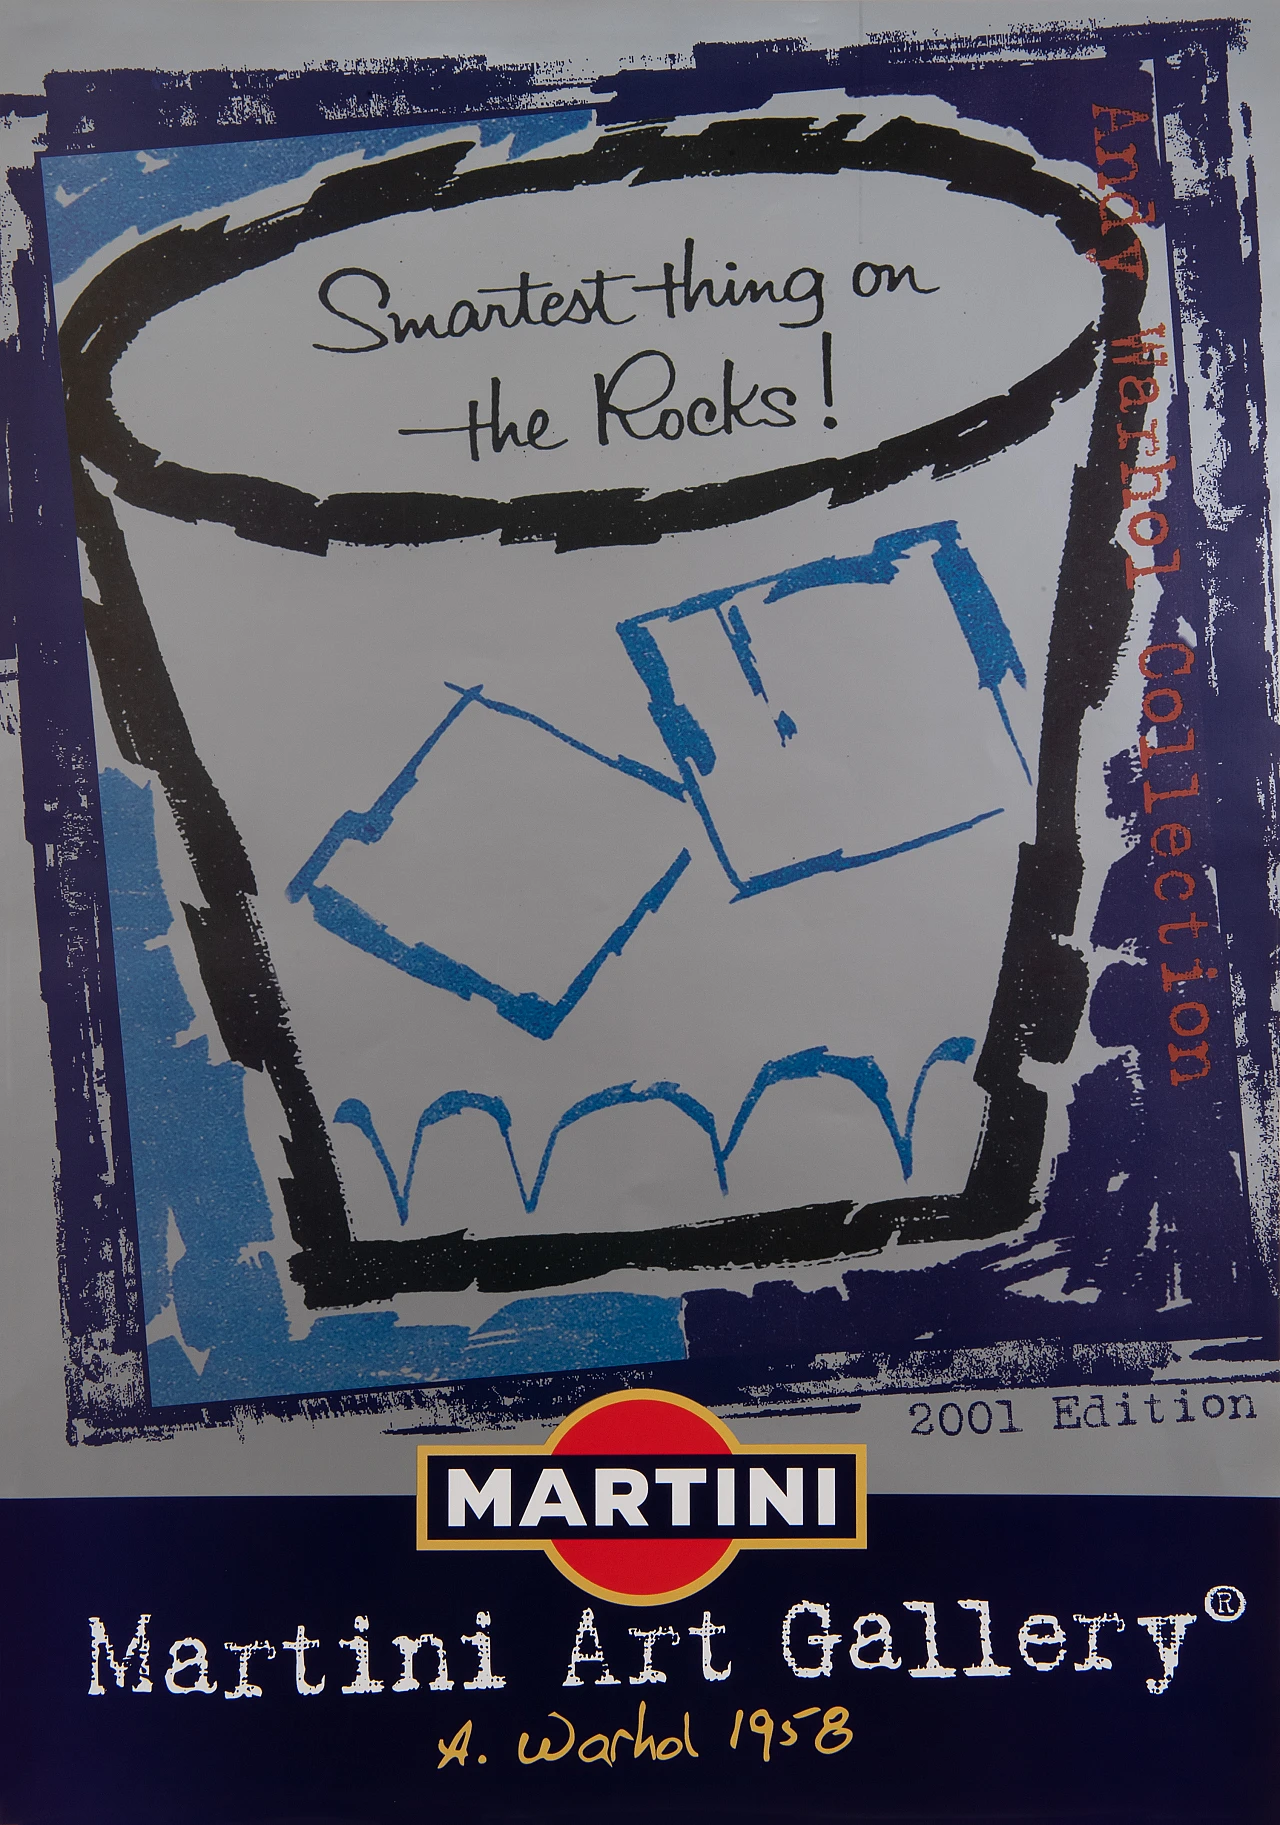 Da Andy Warhol, Martini Art Gallery, litografia, 2001 1